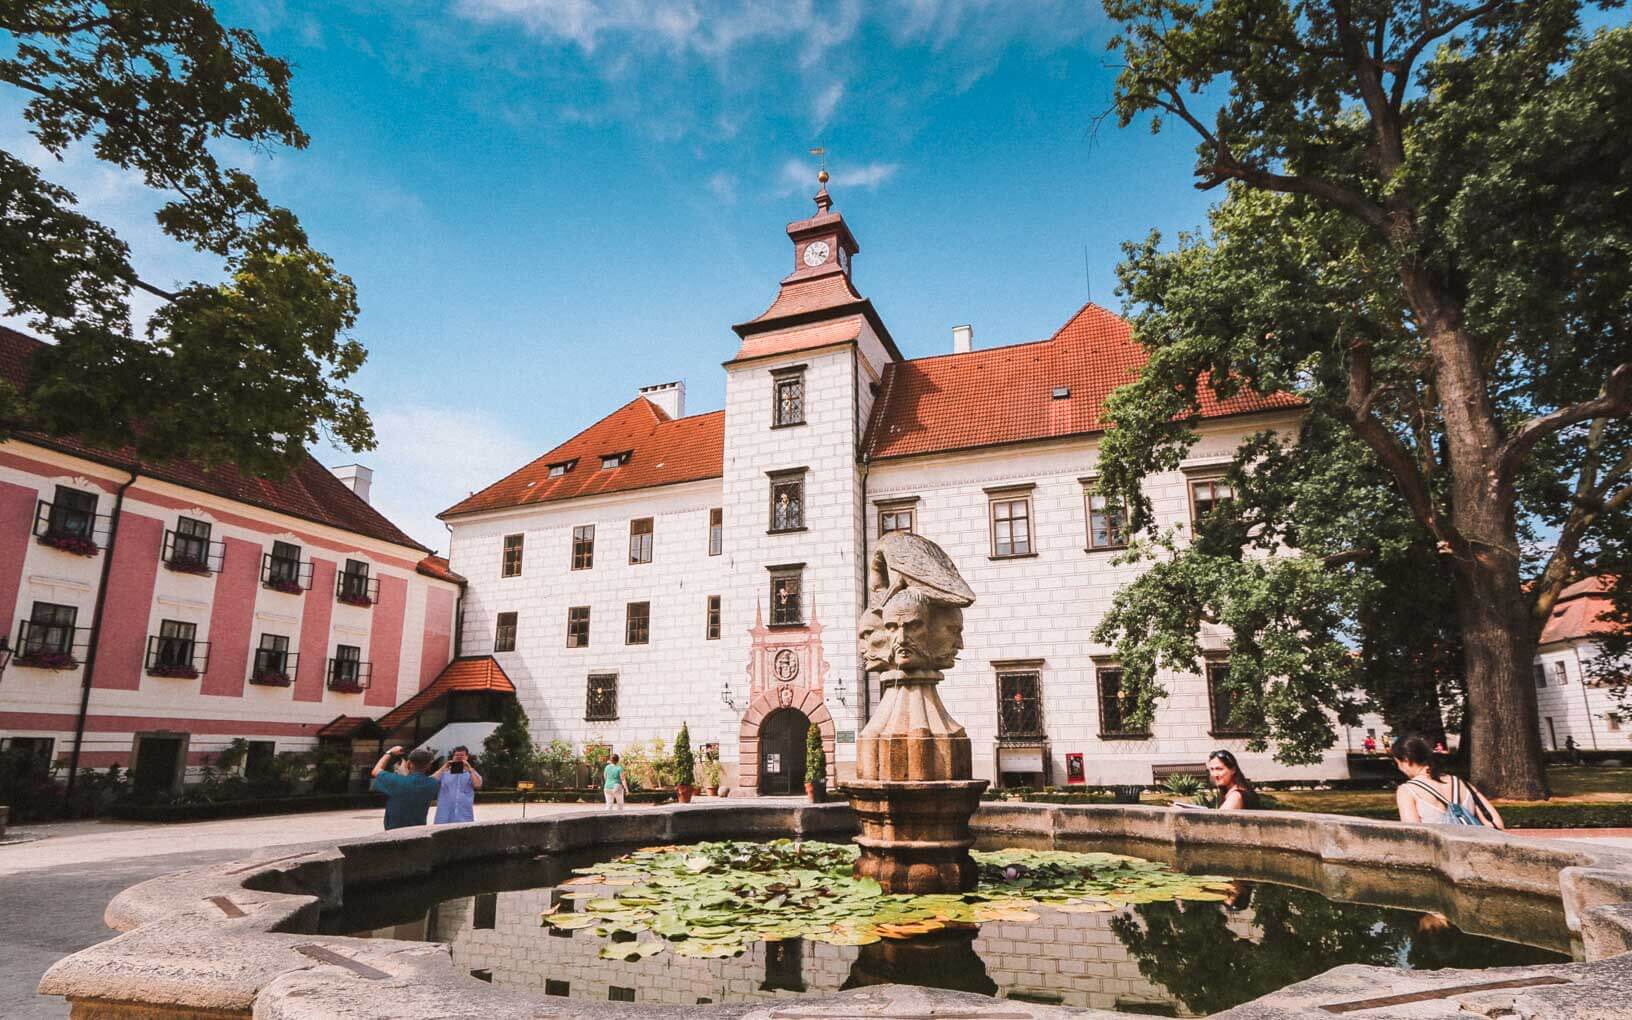 Trebon Castle Fountain Fairy-Tale Castles in Czech Republic That You Didn't Know About